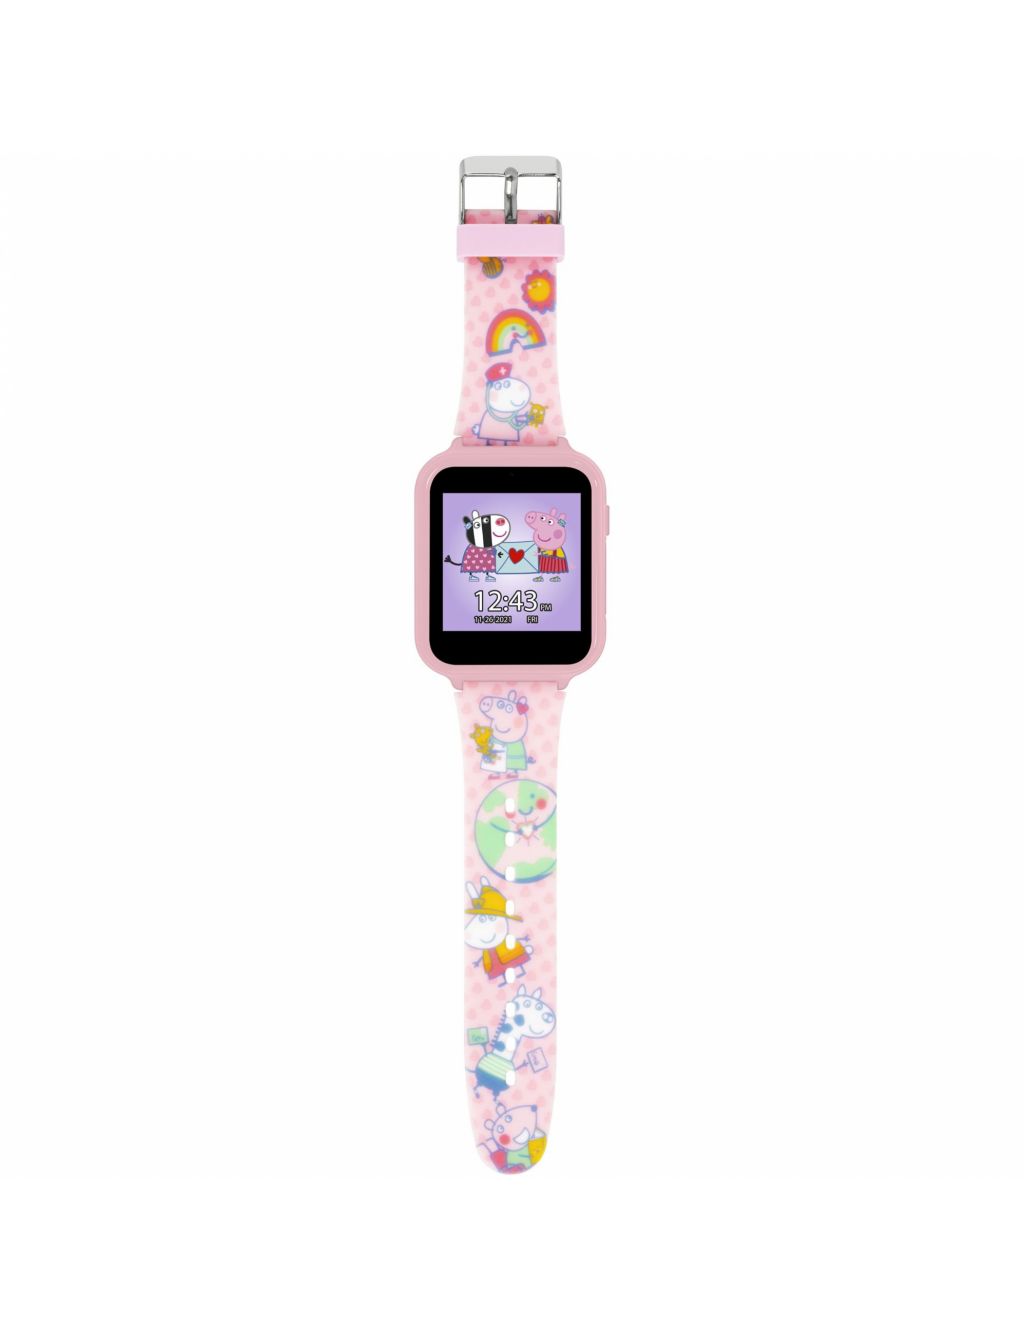 Peppa Pig™ Smartwatch image 3